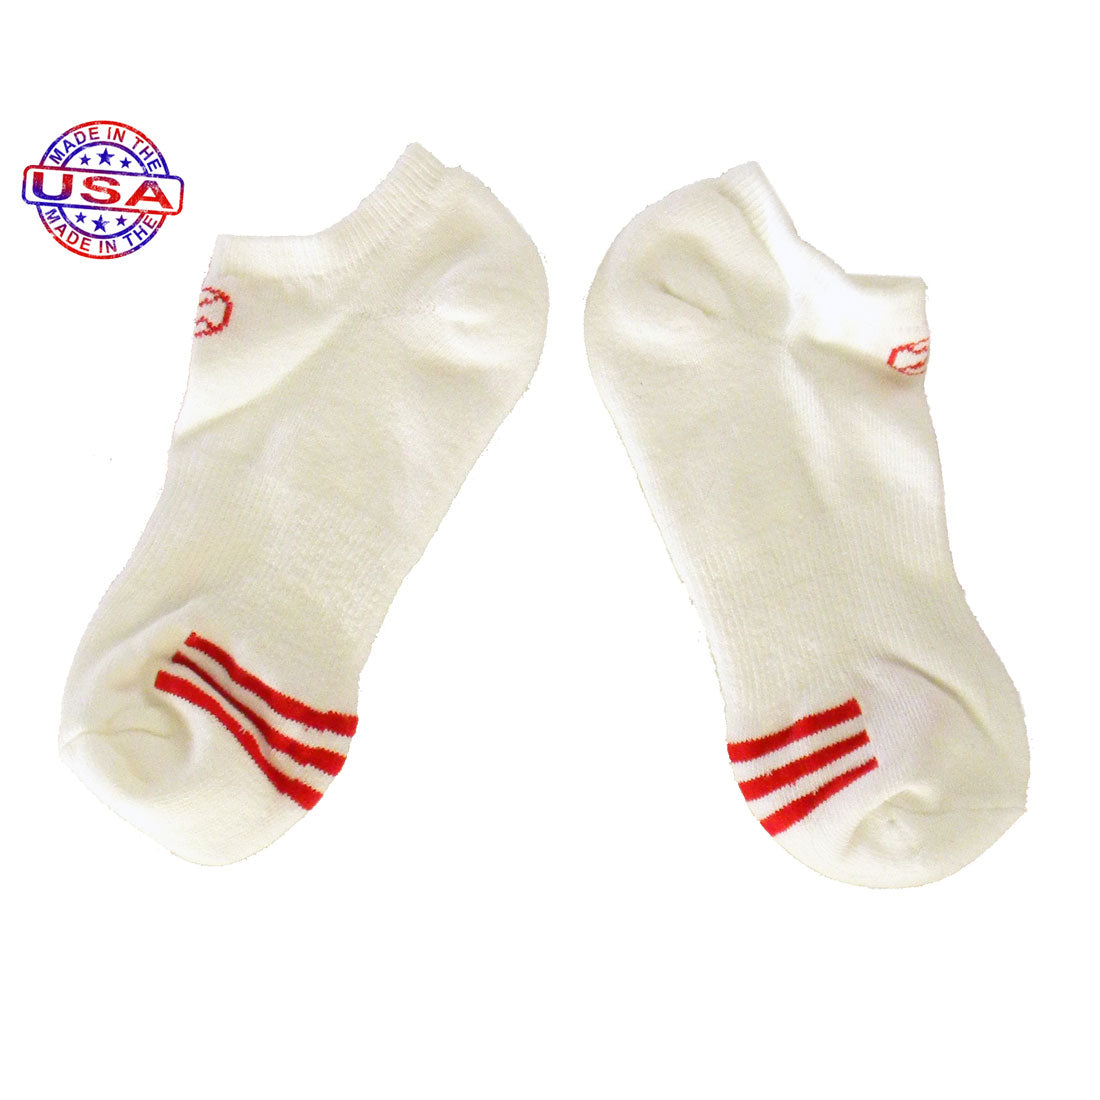 Boys Three Stripes Sports Socks by Jefferies Socks